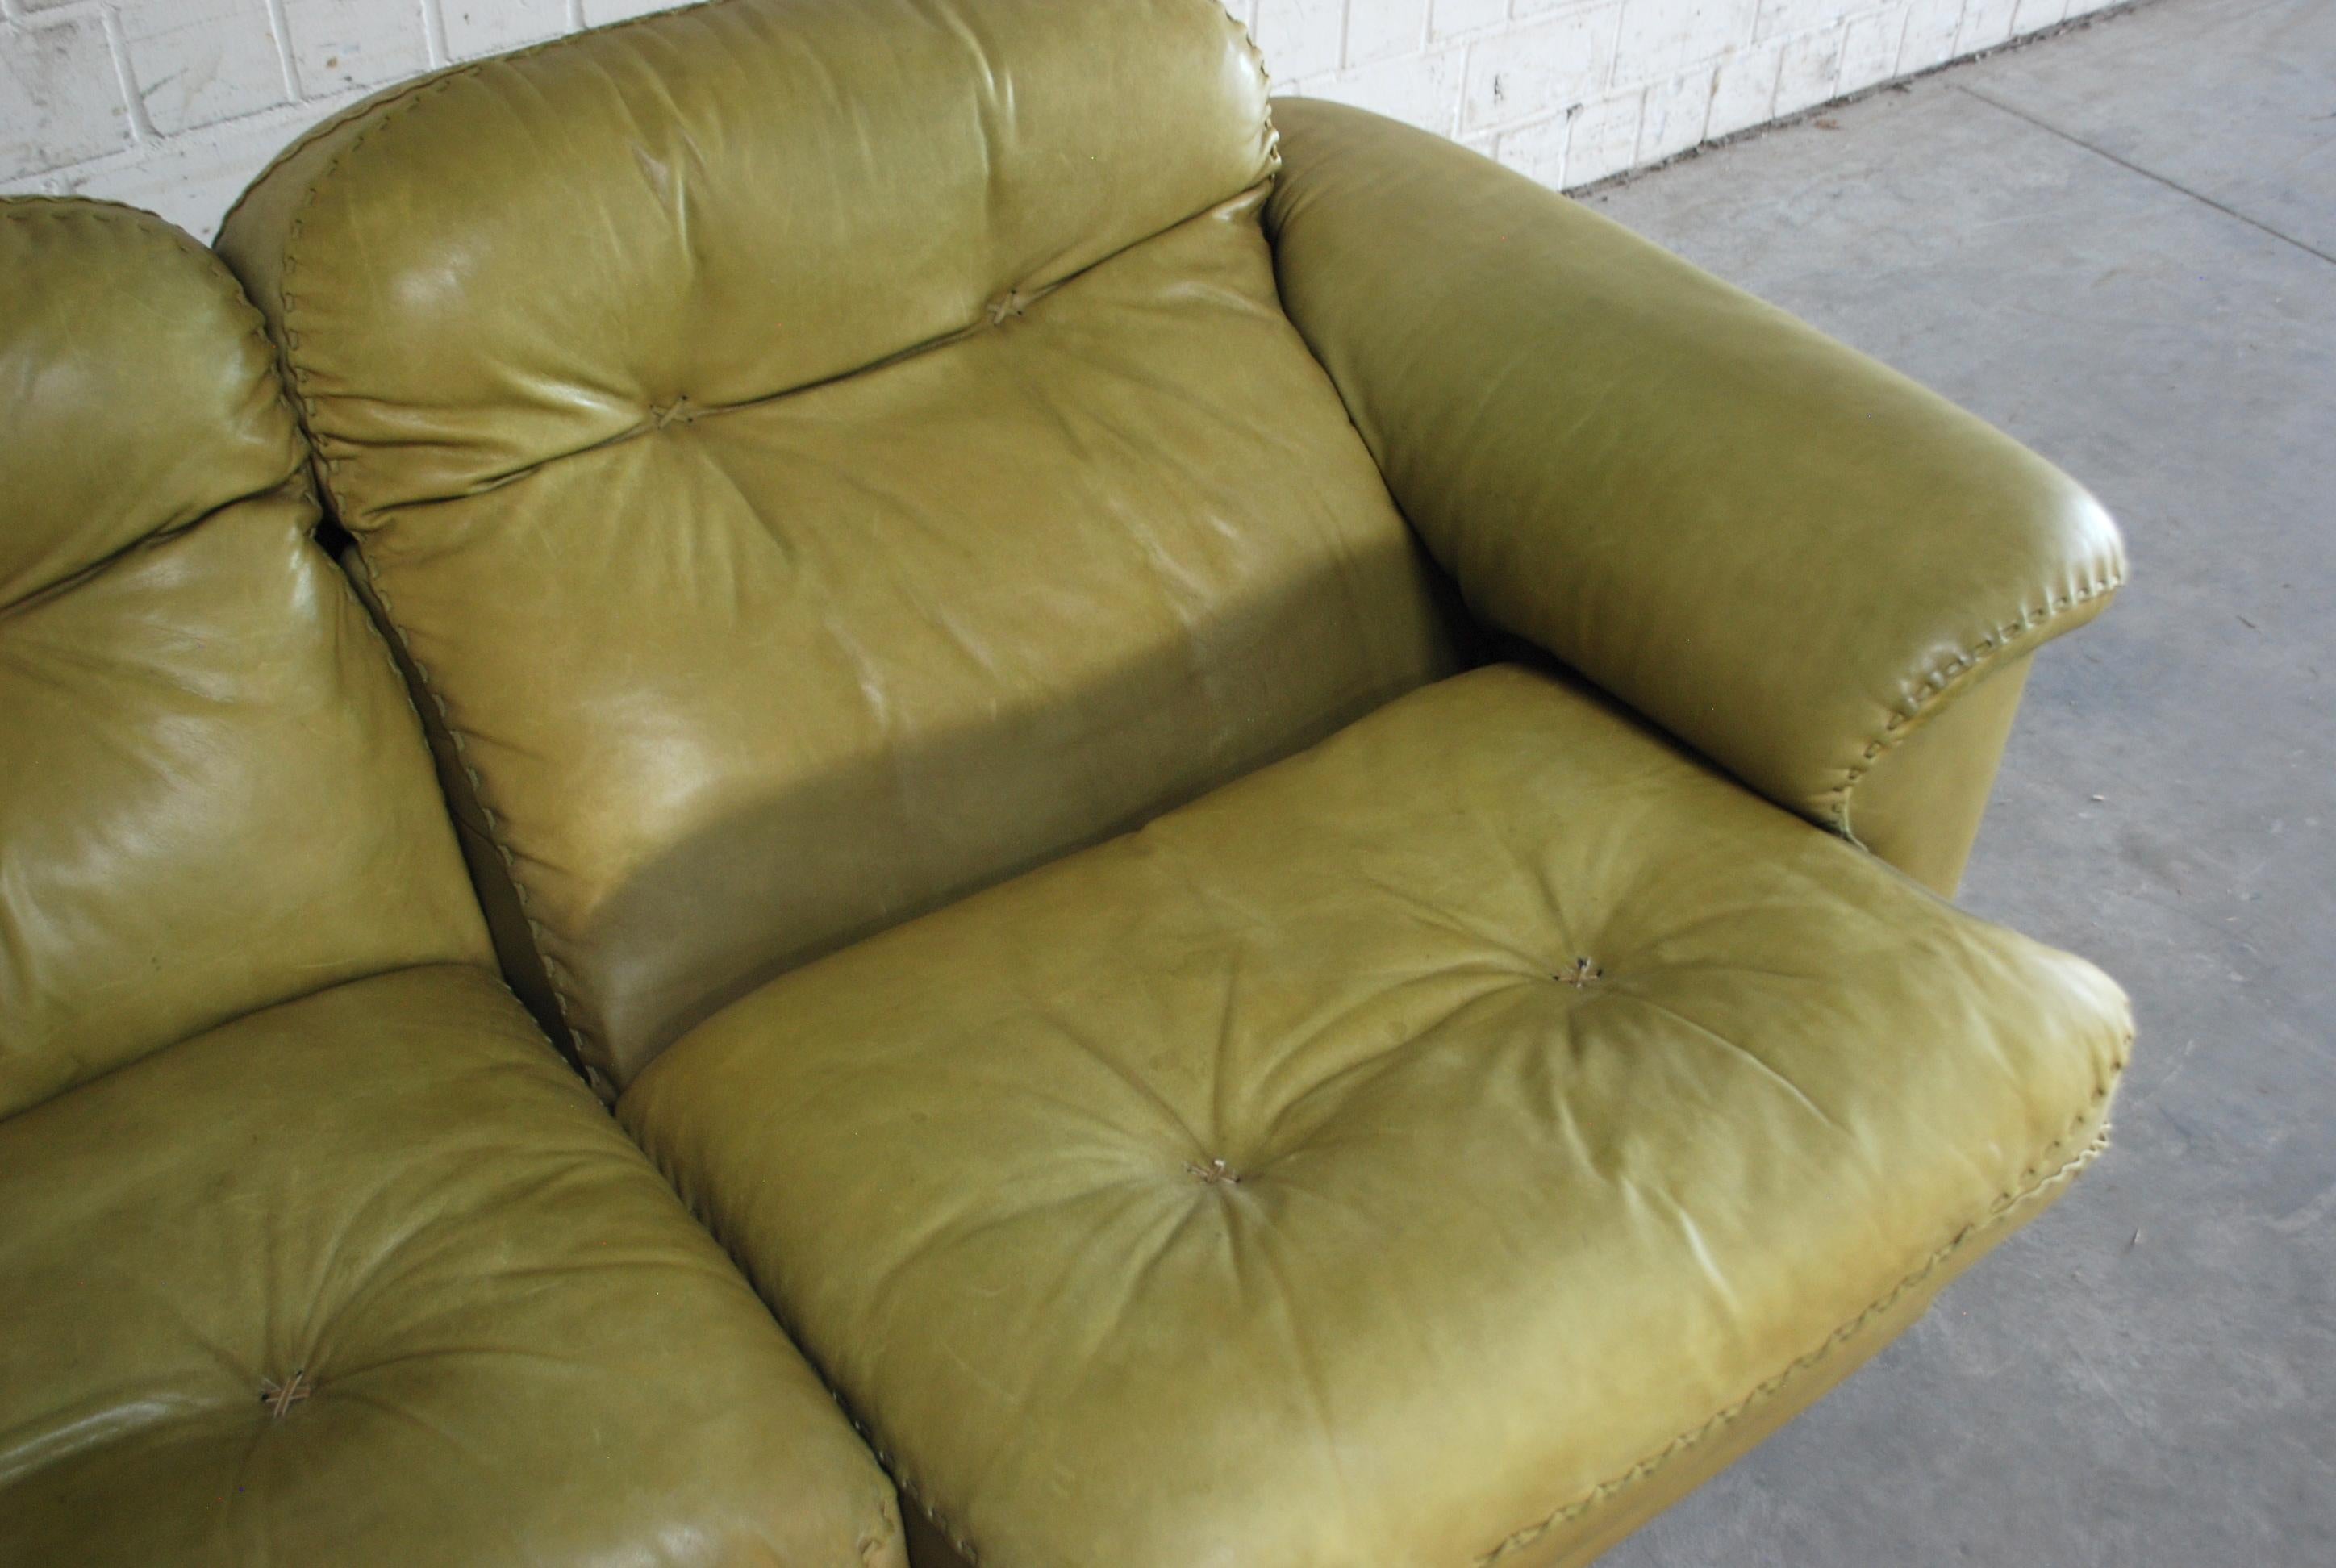 Swiss De Sede James Bond Leather Sofa DS 101 Olive Green For Sale